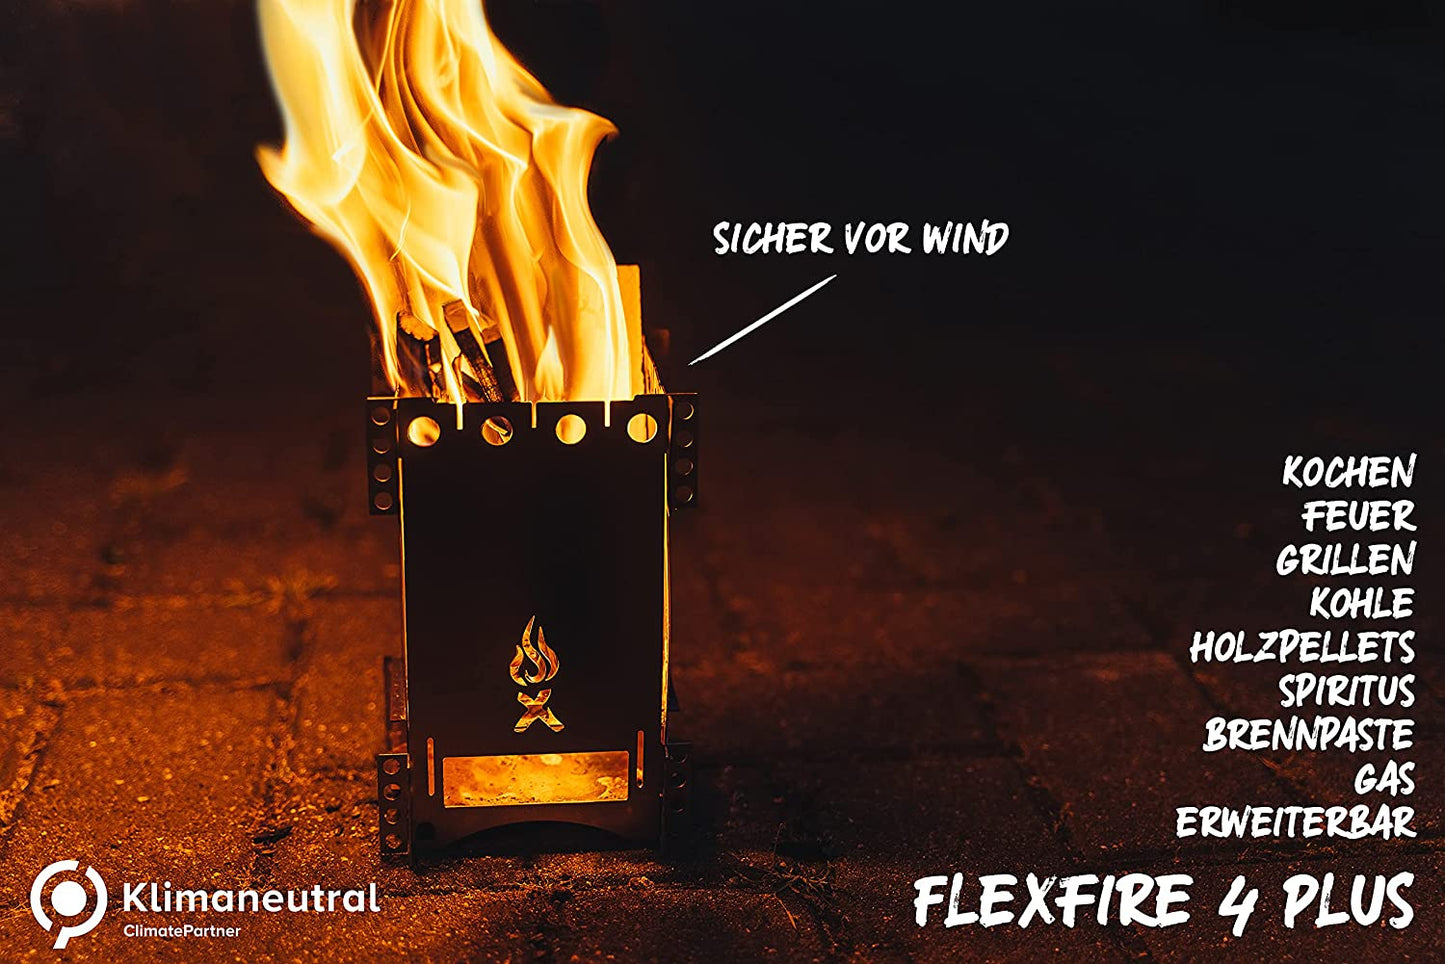 FlexFire 4 Plus